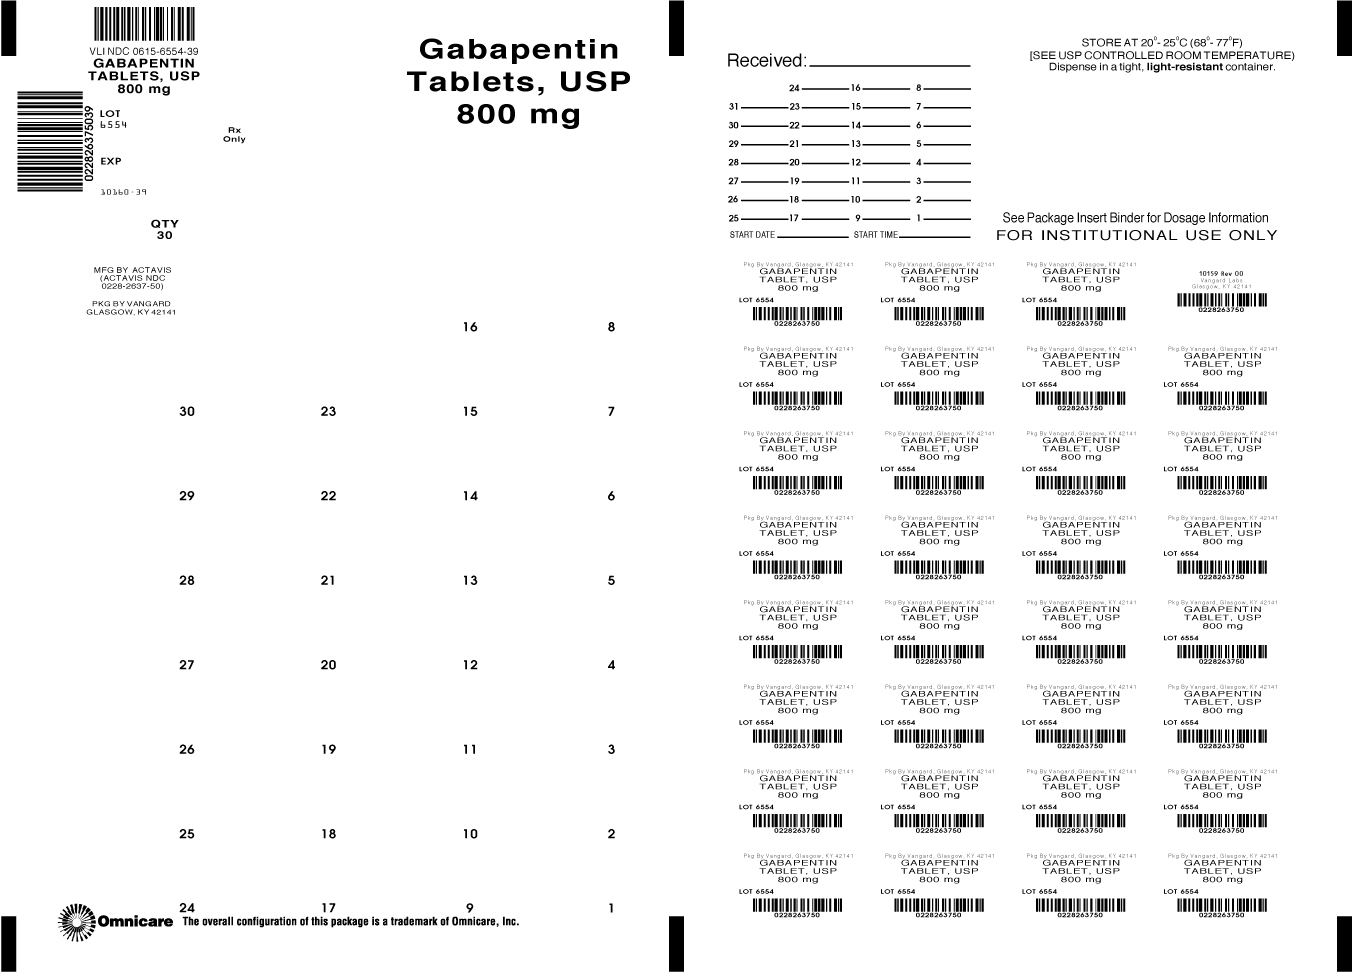 Gabapentin Tablets, USP 800mg